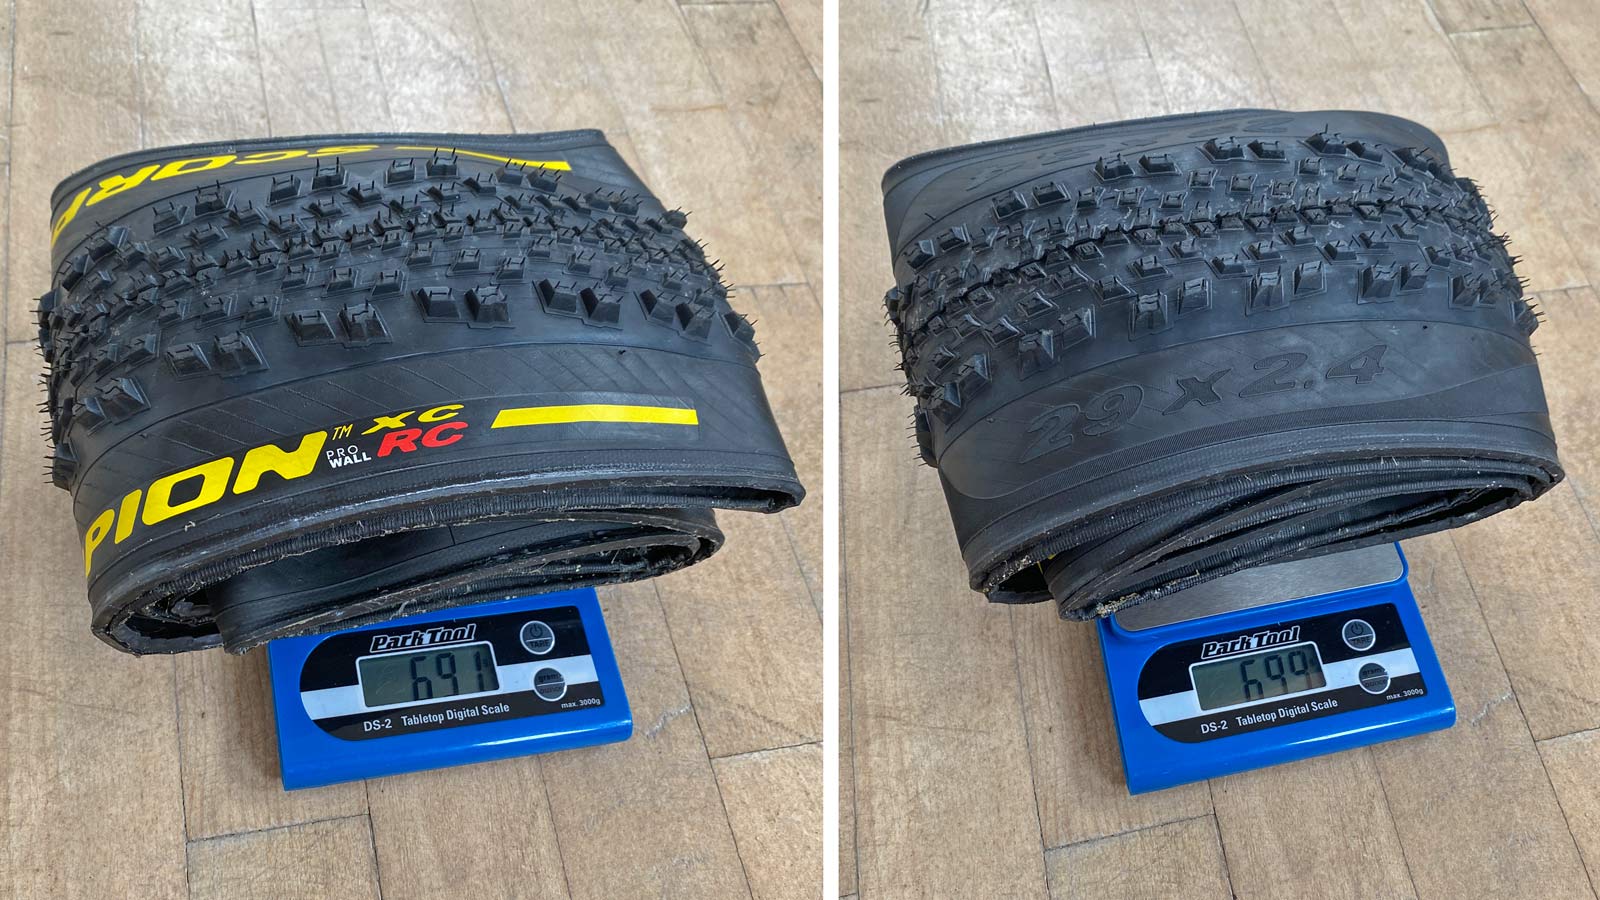 Pirelli Scorpion XC RC 2.4" light wide mountain bike cross-country race tire, 695g actual weight